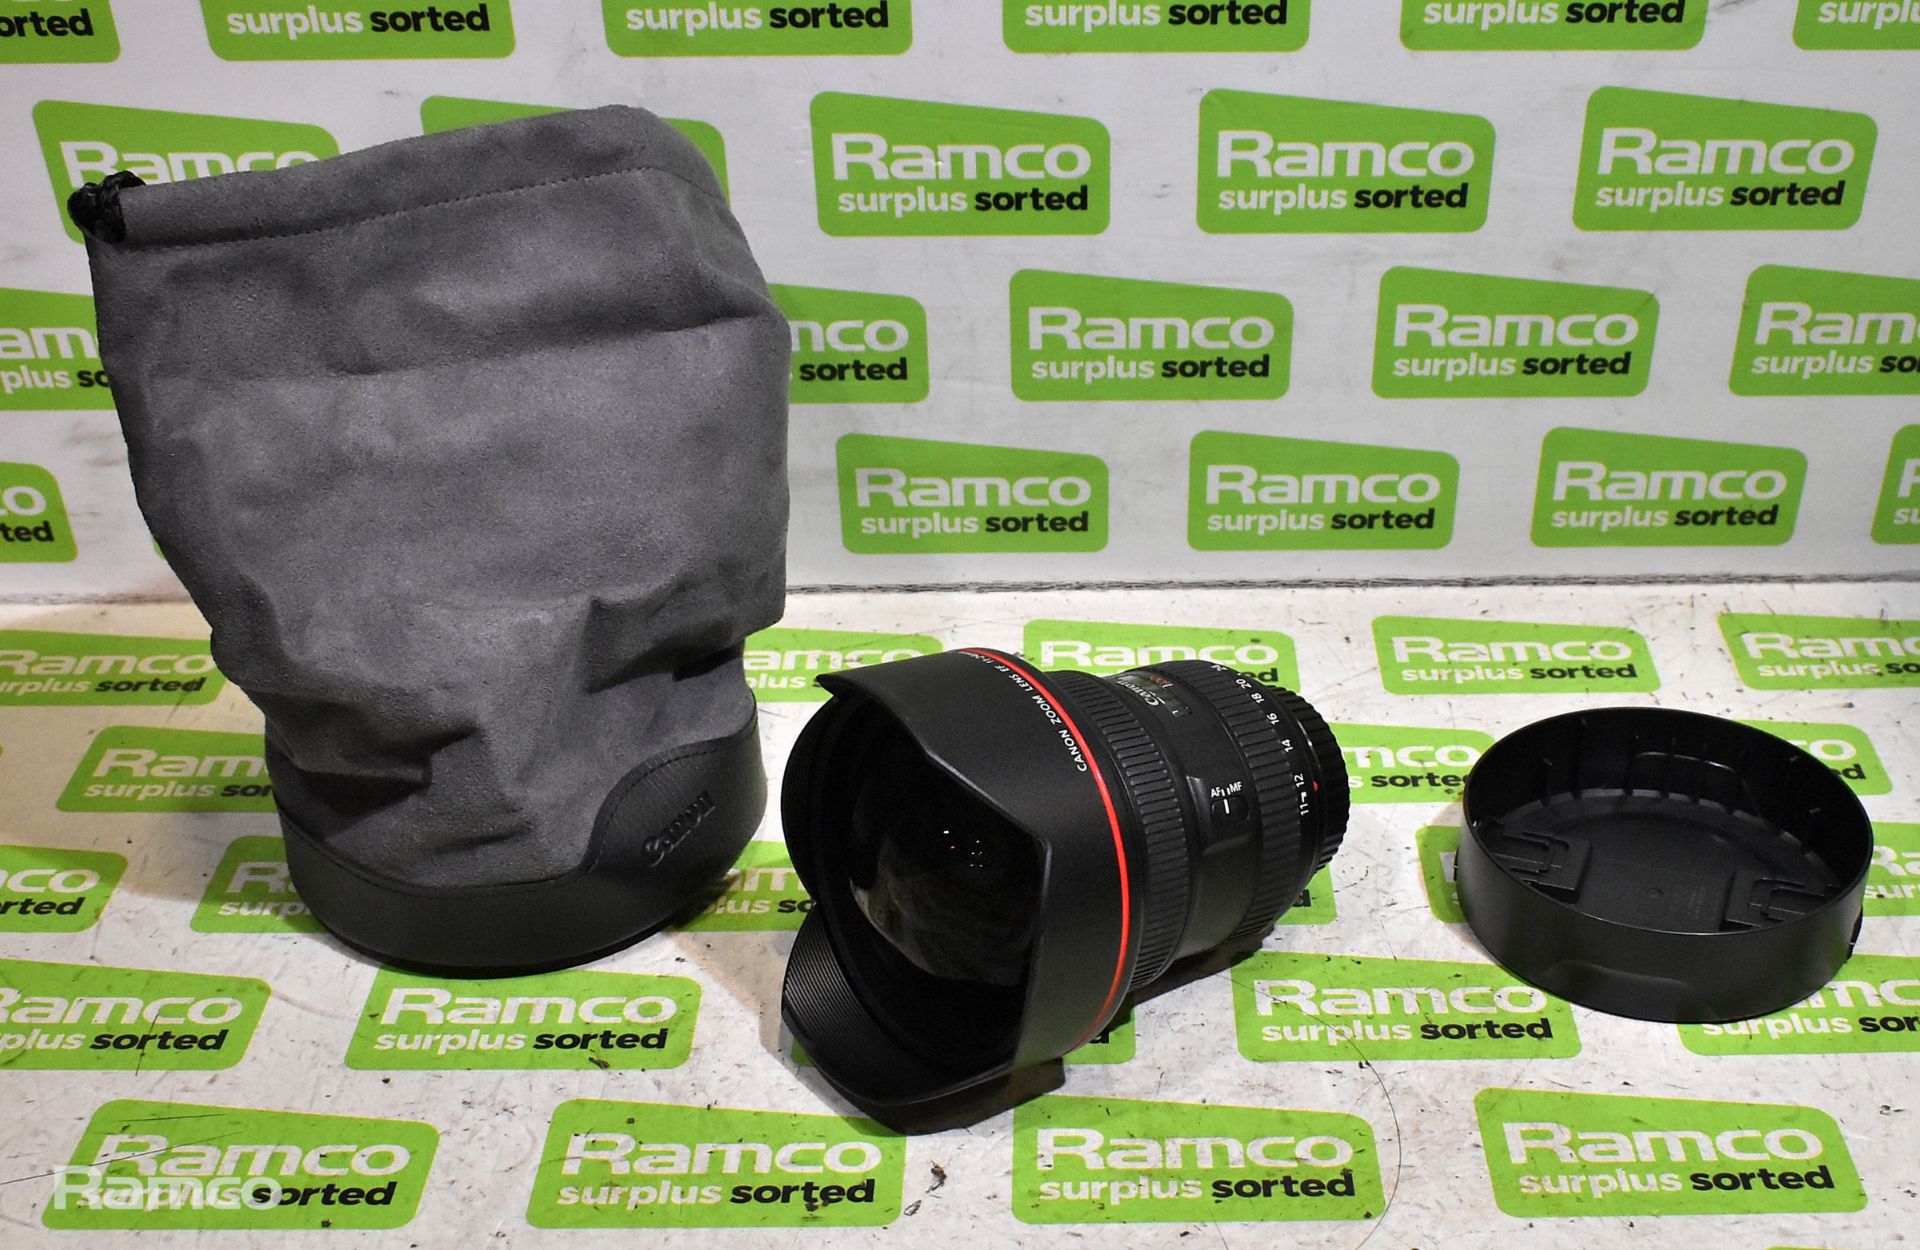 Canon Zoom lens EF 11-24mm F/4 L USM - 11-24mm Ultrasonic - lens cover, bag